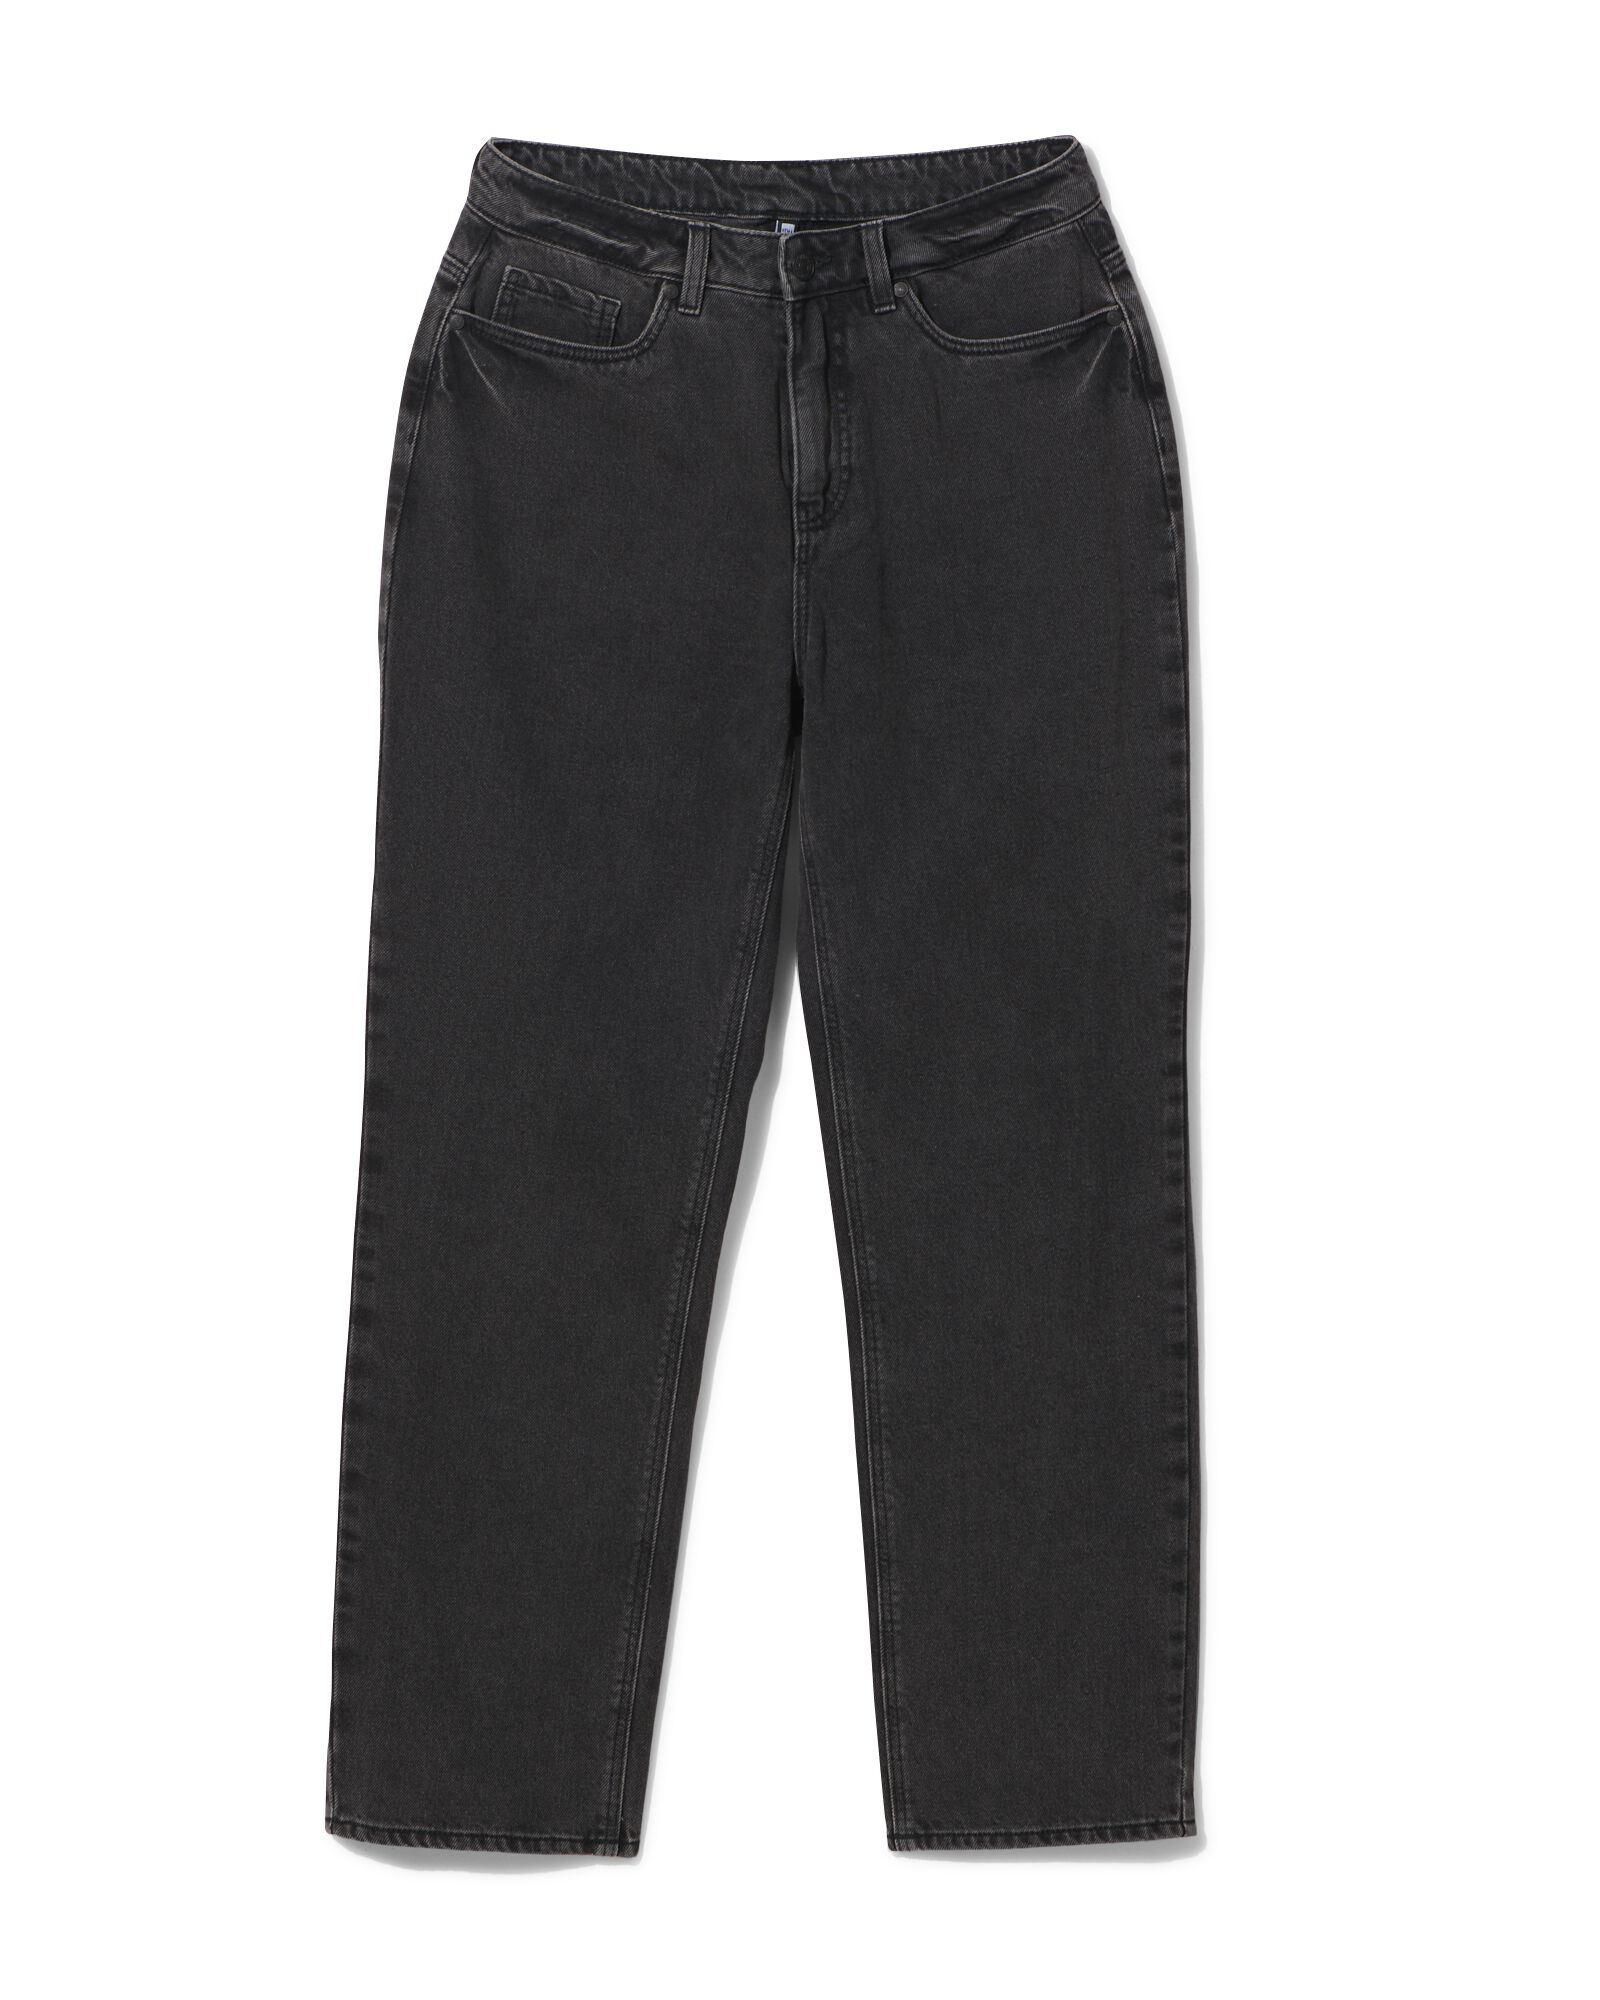 Damen-Jeans, Straight Fit dunkelgrau 46 - 36319986 - HEMA